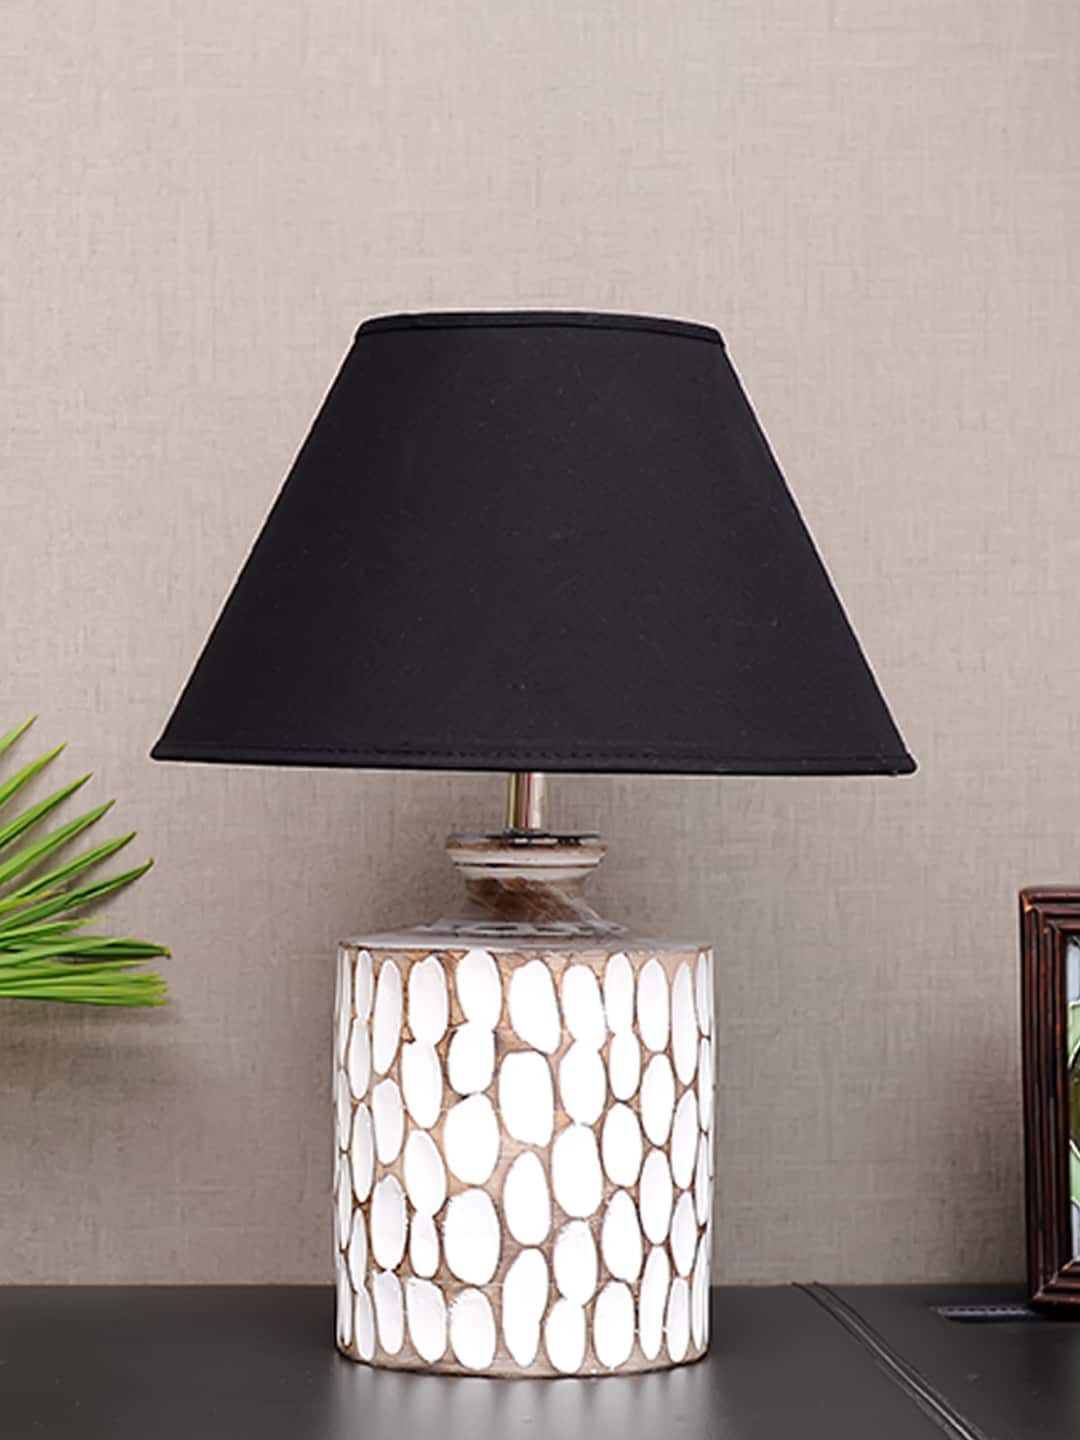 THE LIGHT STORE White Self-Design Frustum Table Lamp Price in India